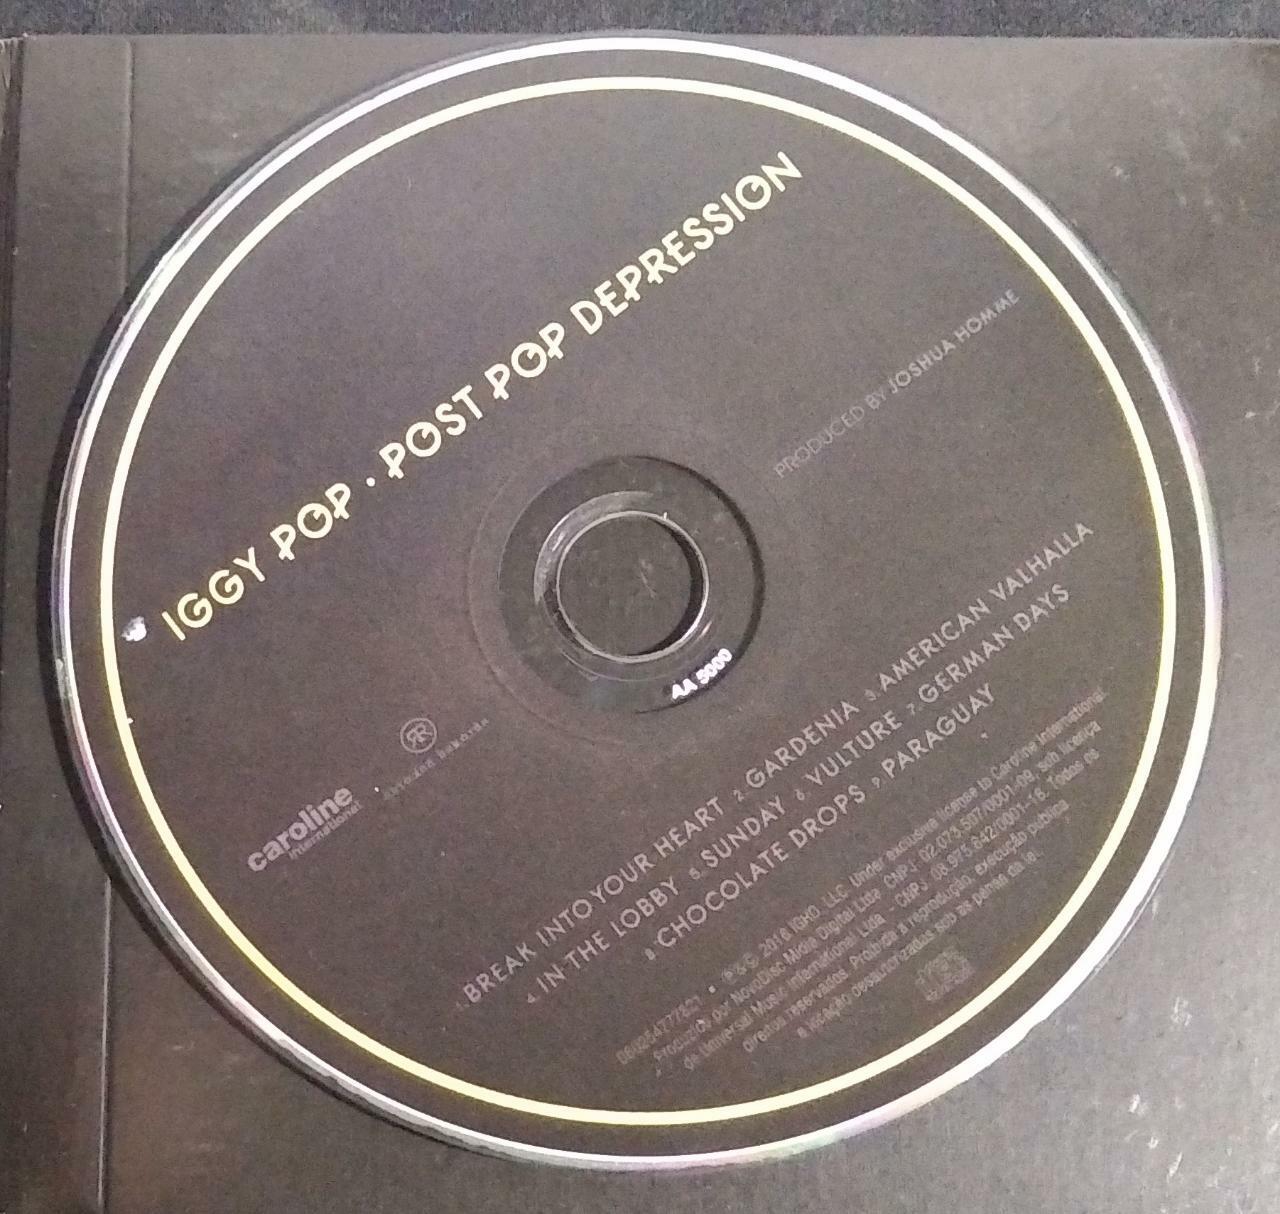 CD - Iggy Pop - Post Pop Depression (Paper Sleeve)